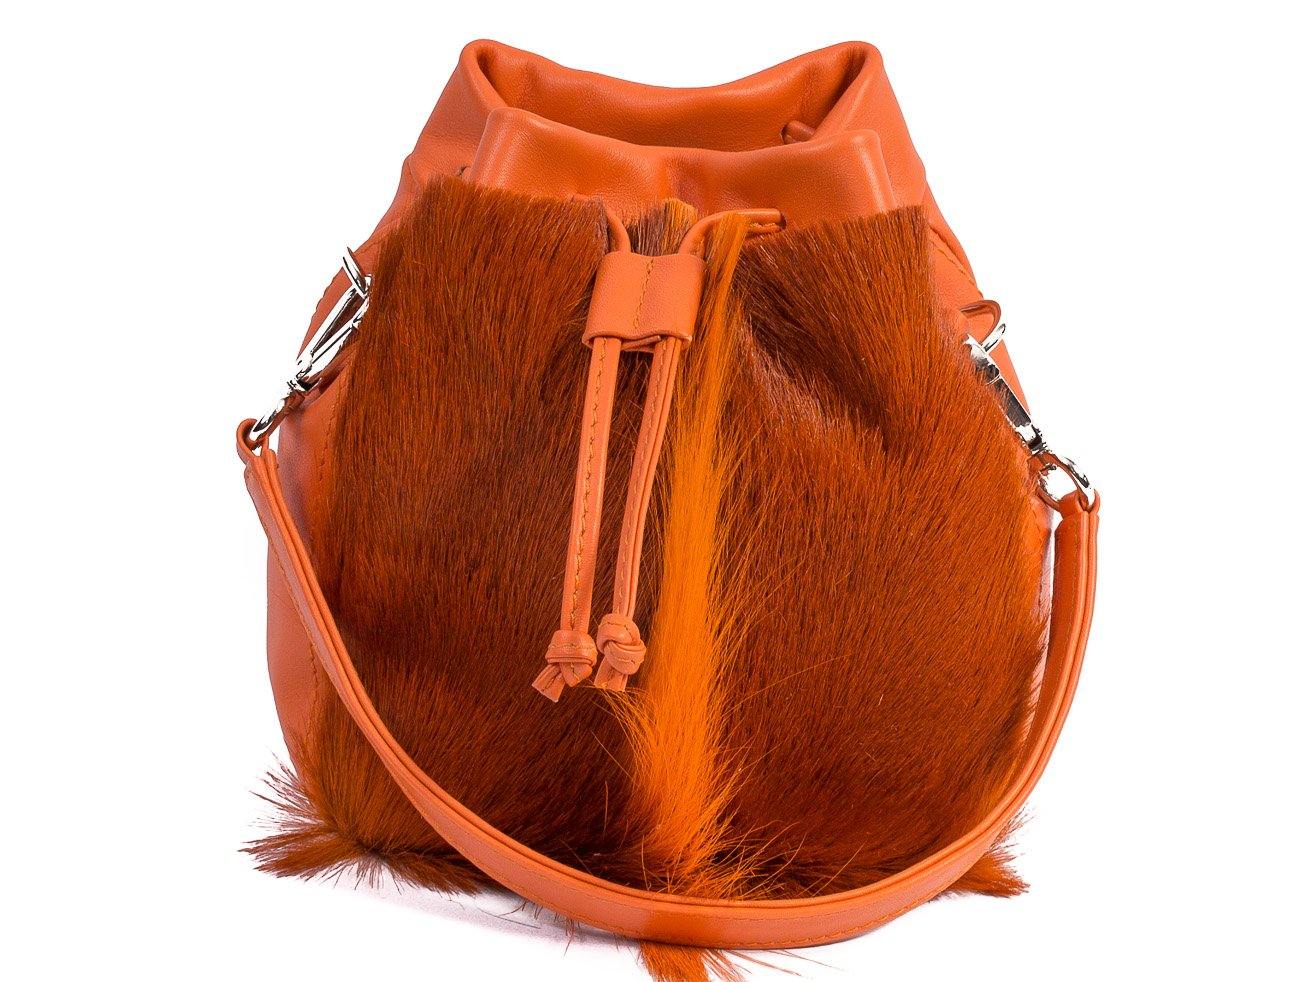 sherene melinda springbok hair-on-hide orange leather pouch bag Fan front